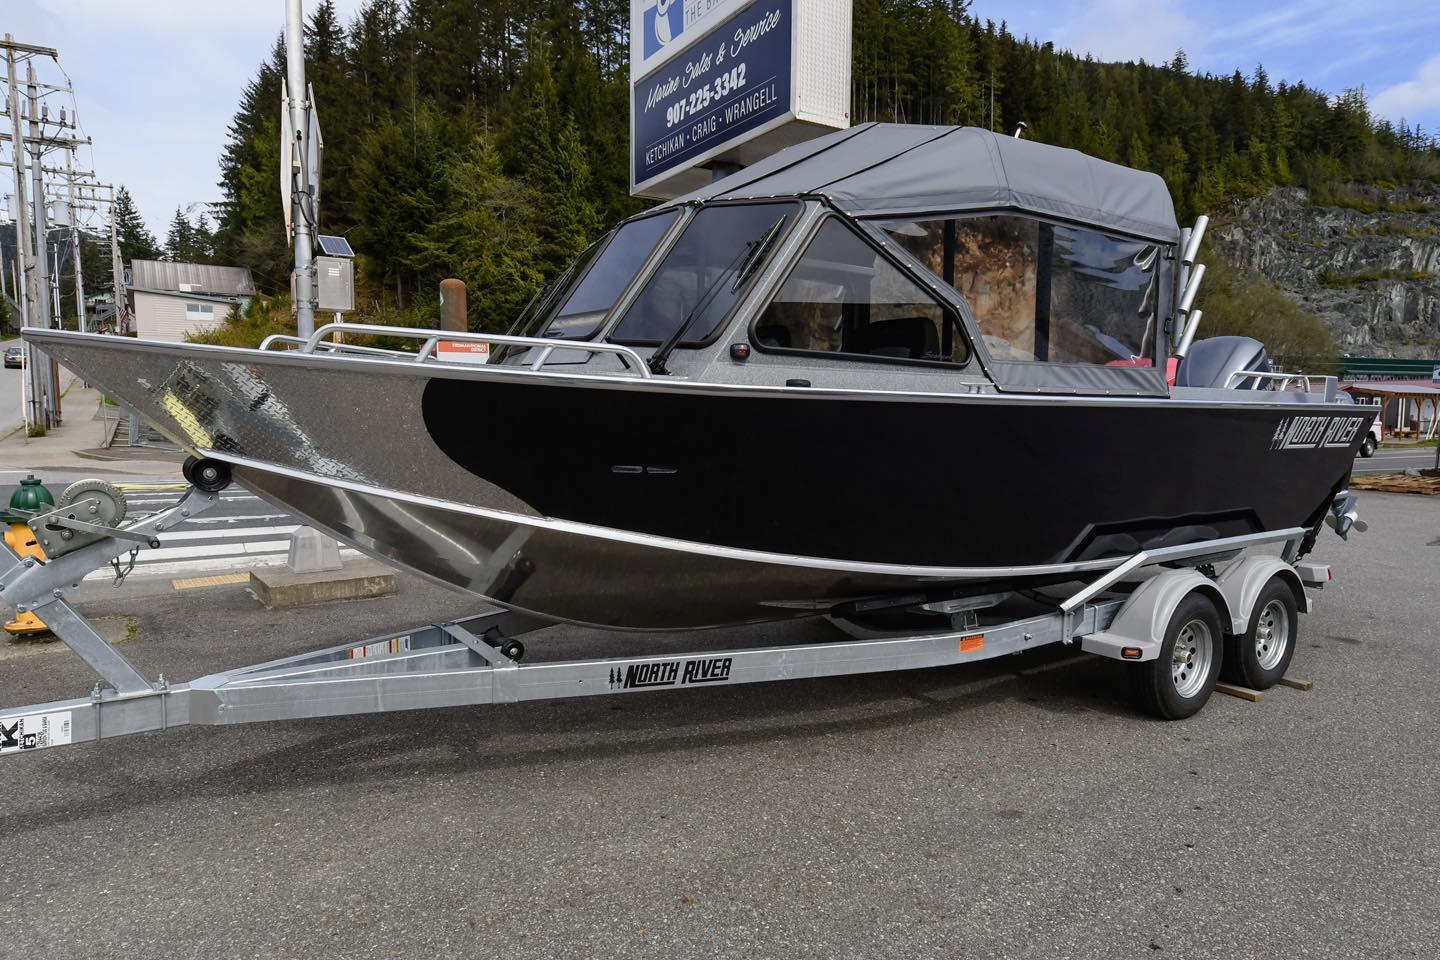 North River Seahawk Outboard 22' - Boats for Sale - Seamagazine